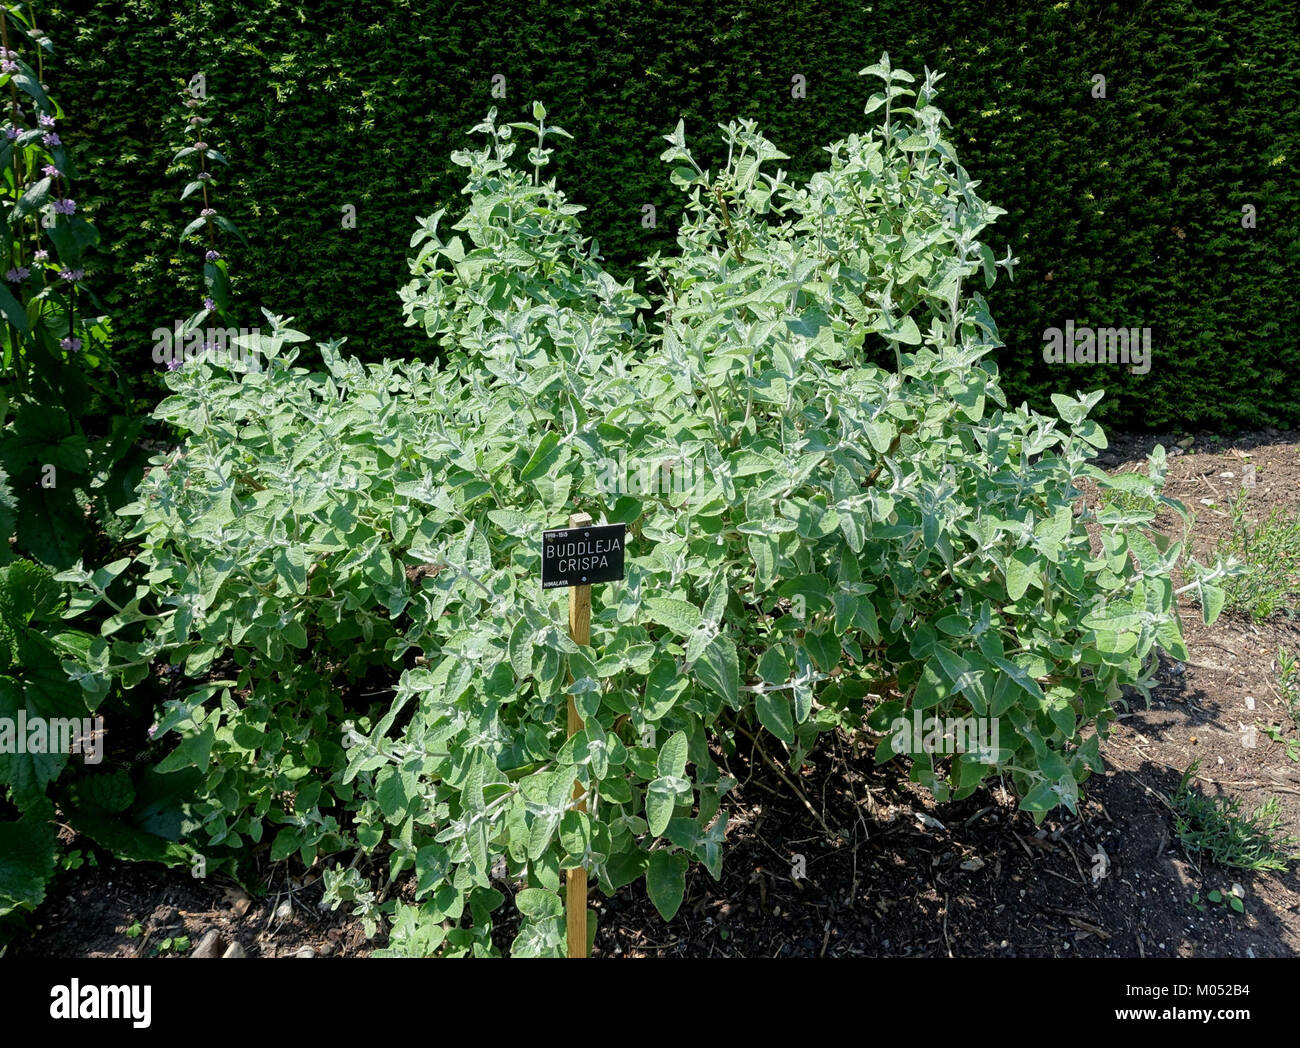 Buddleja crispa - Savill Garden - Windsor Great Park, England - DSC06174 Stock Photo